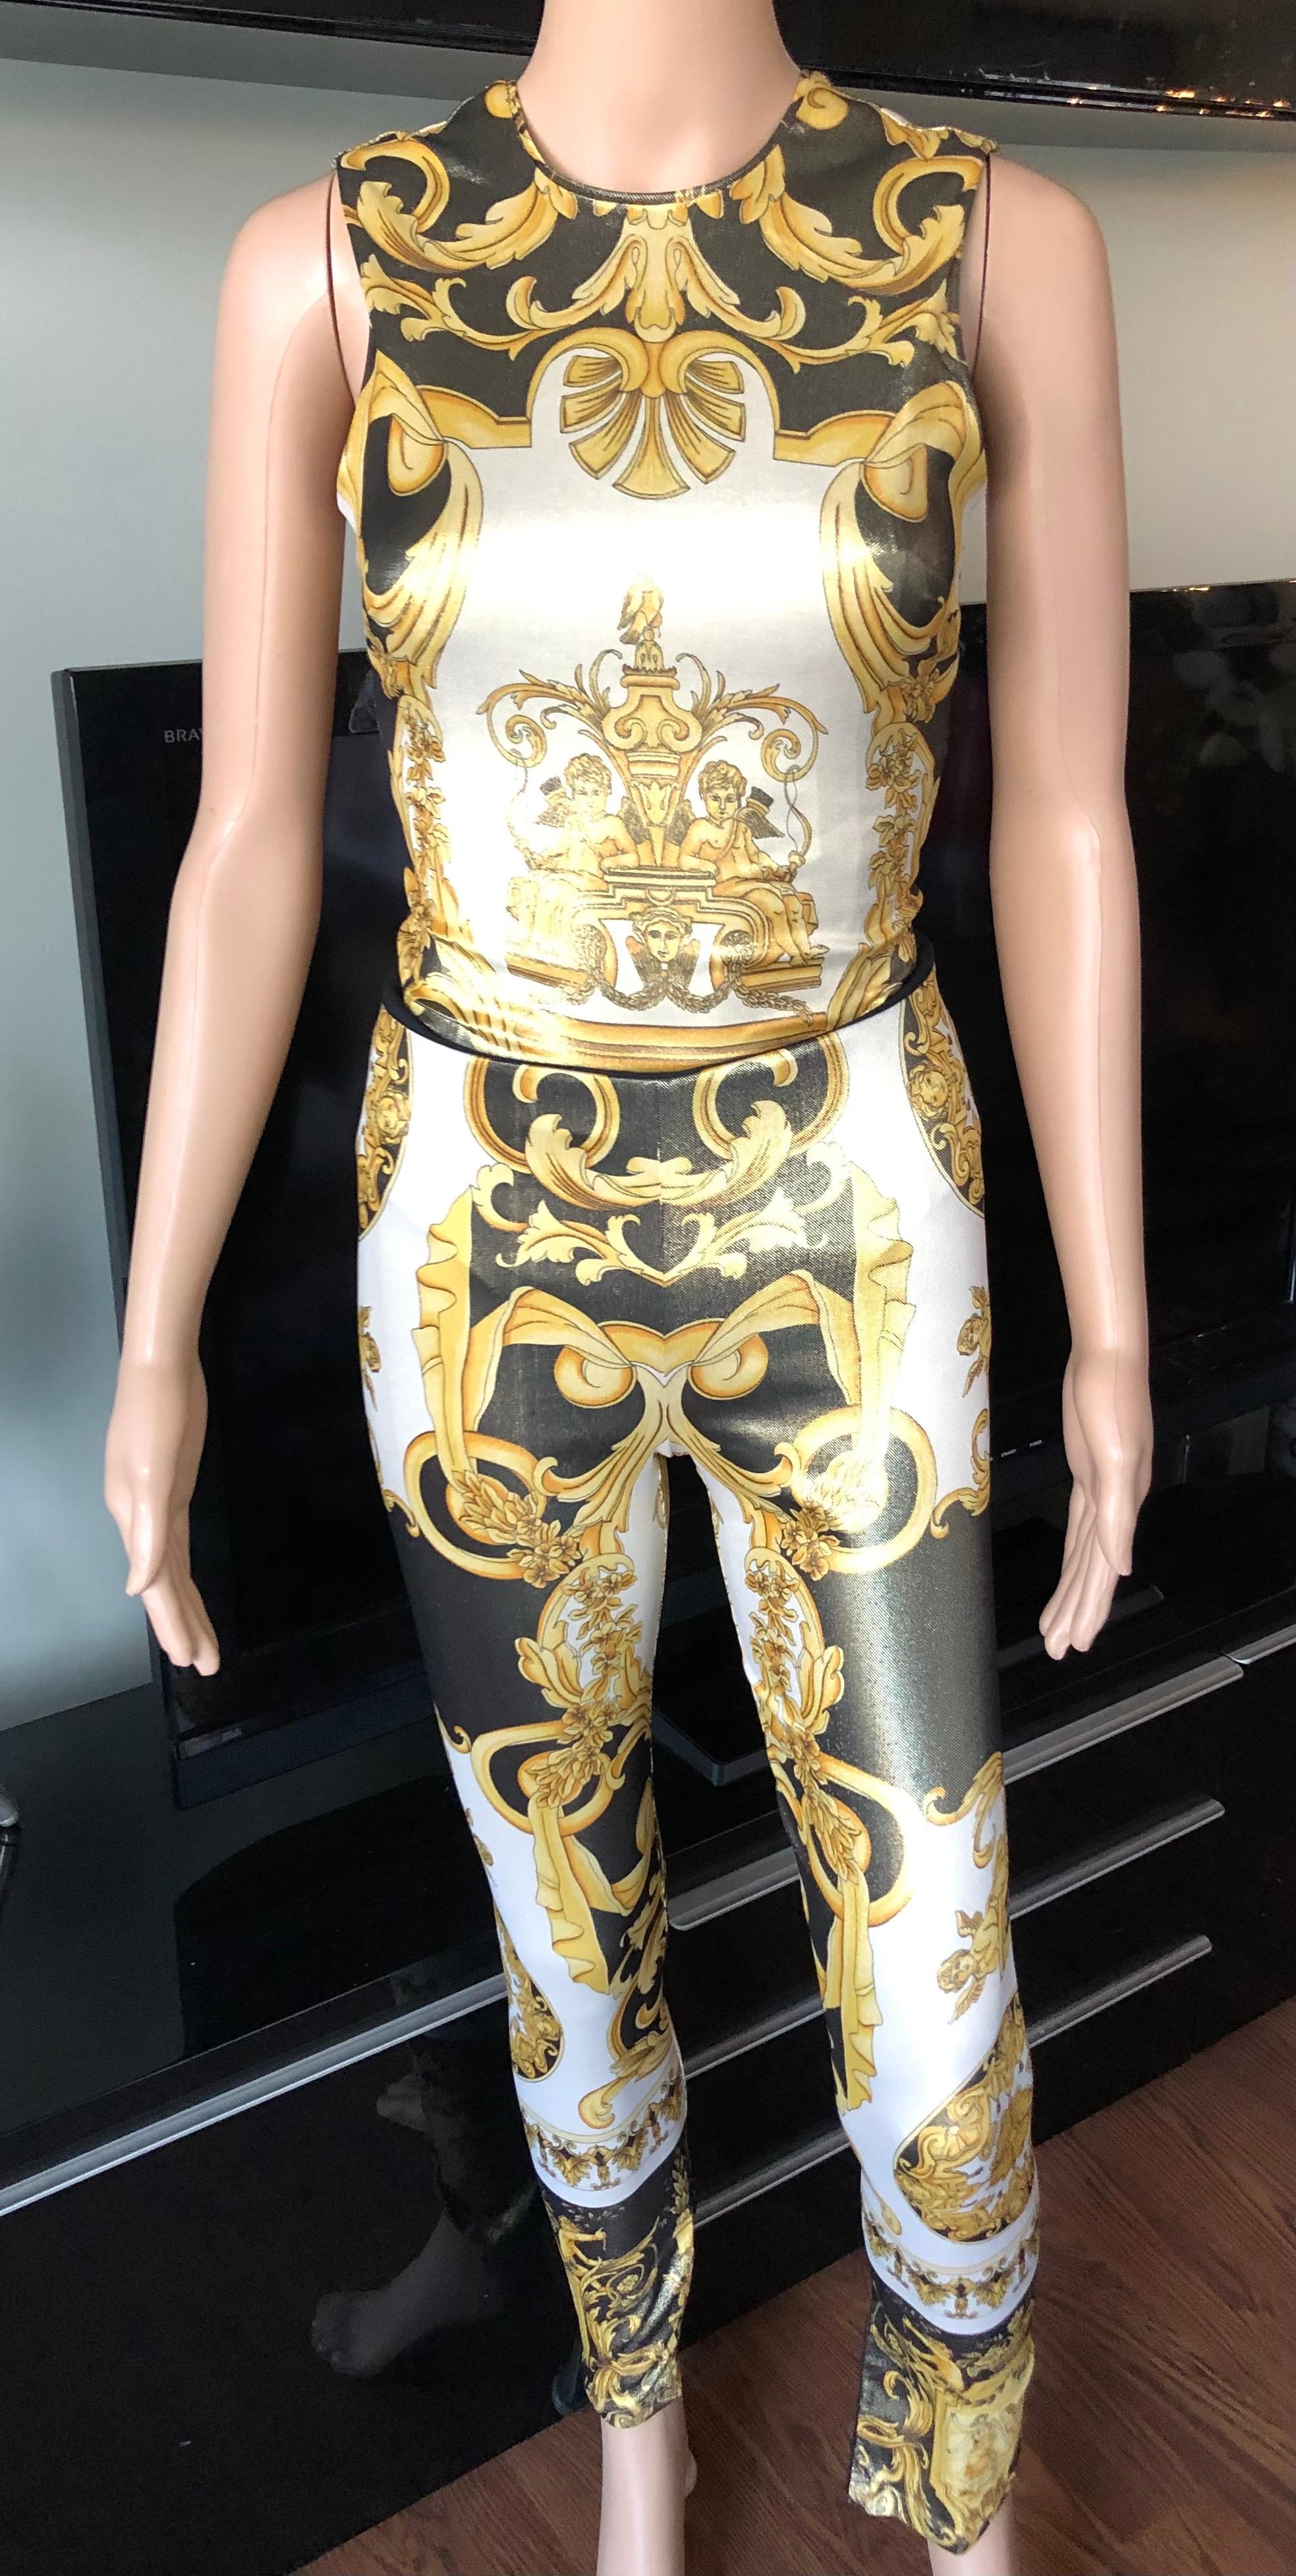 Versace S/S 2018 Runway Tribute Collection Baroque Print Metallic Leggings & Bodysuit Top Ensemble 2 Piece Set IT 38

Like New Condition